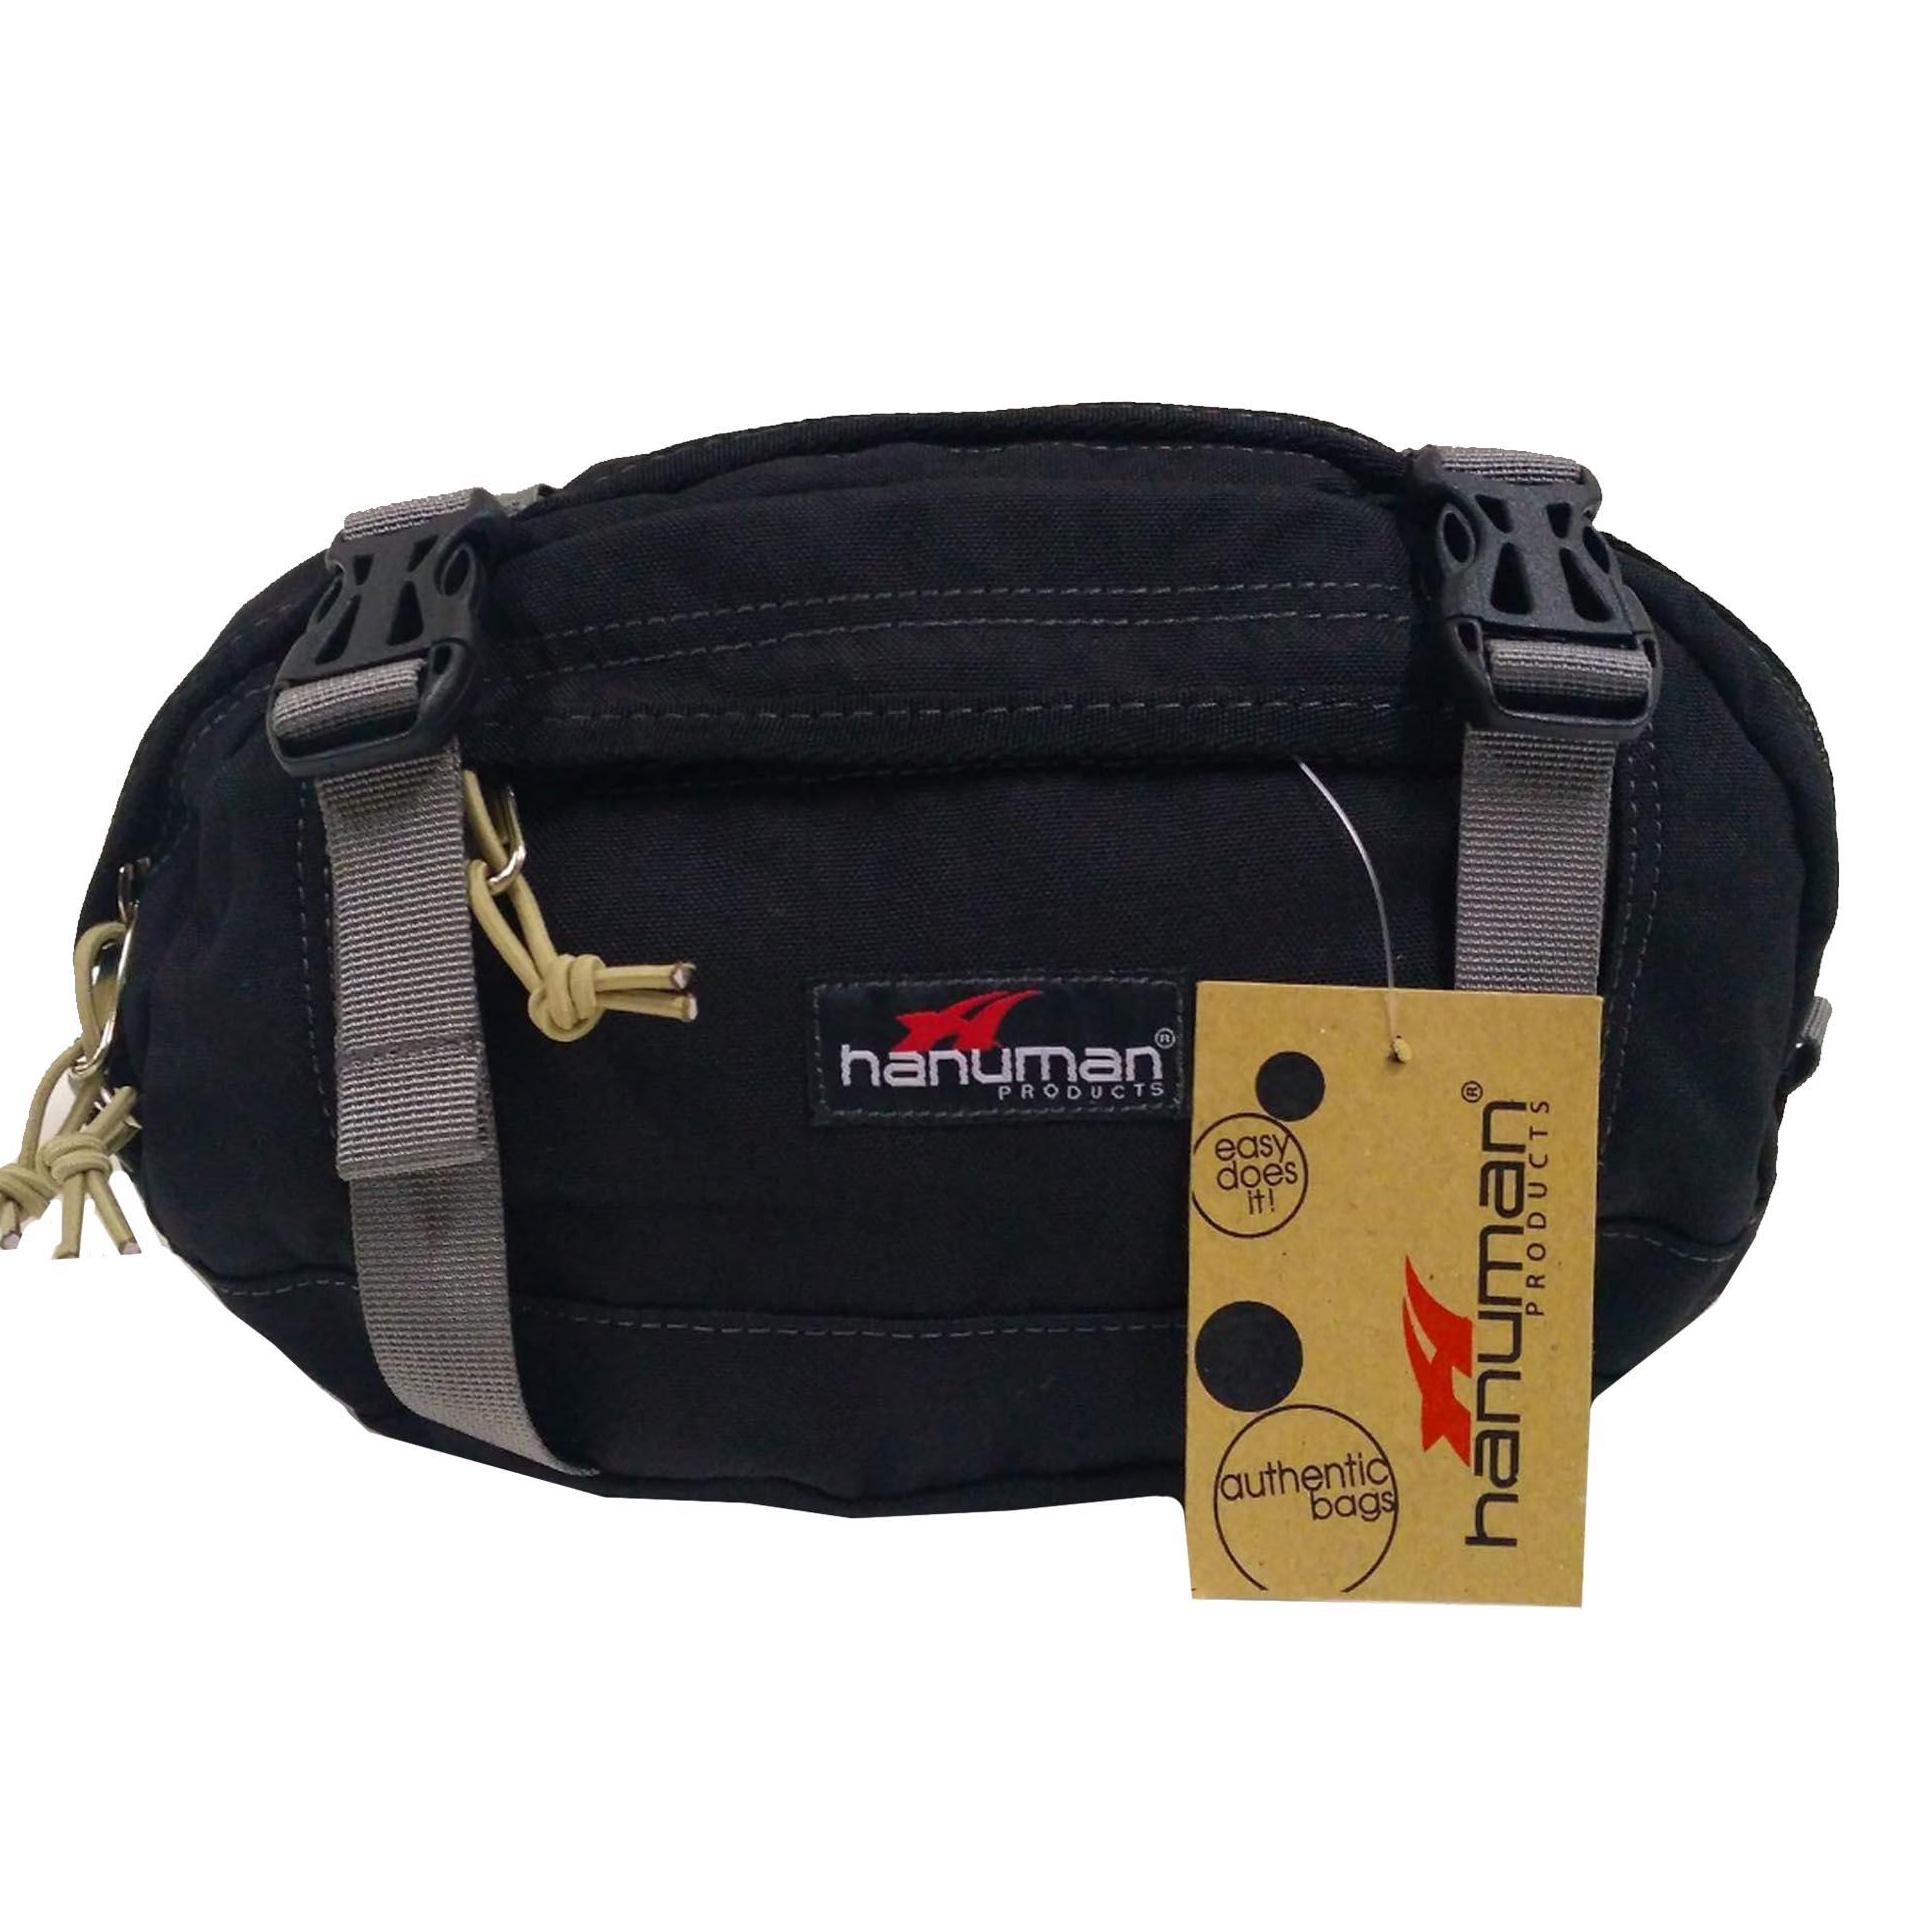 fila belt bag original price